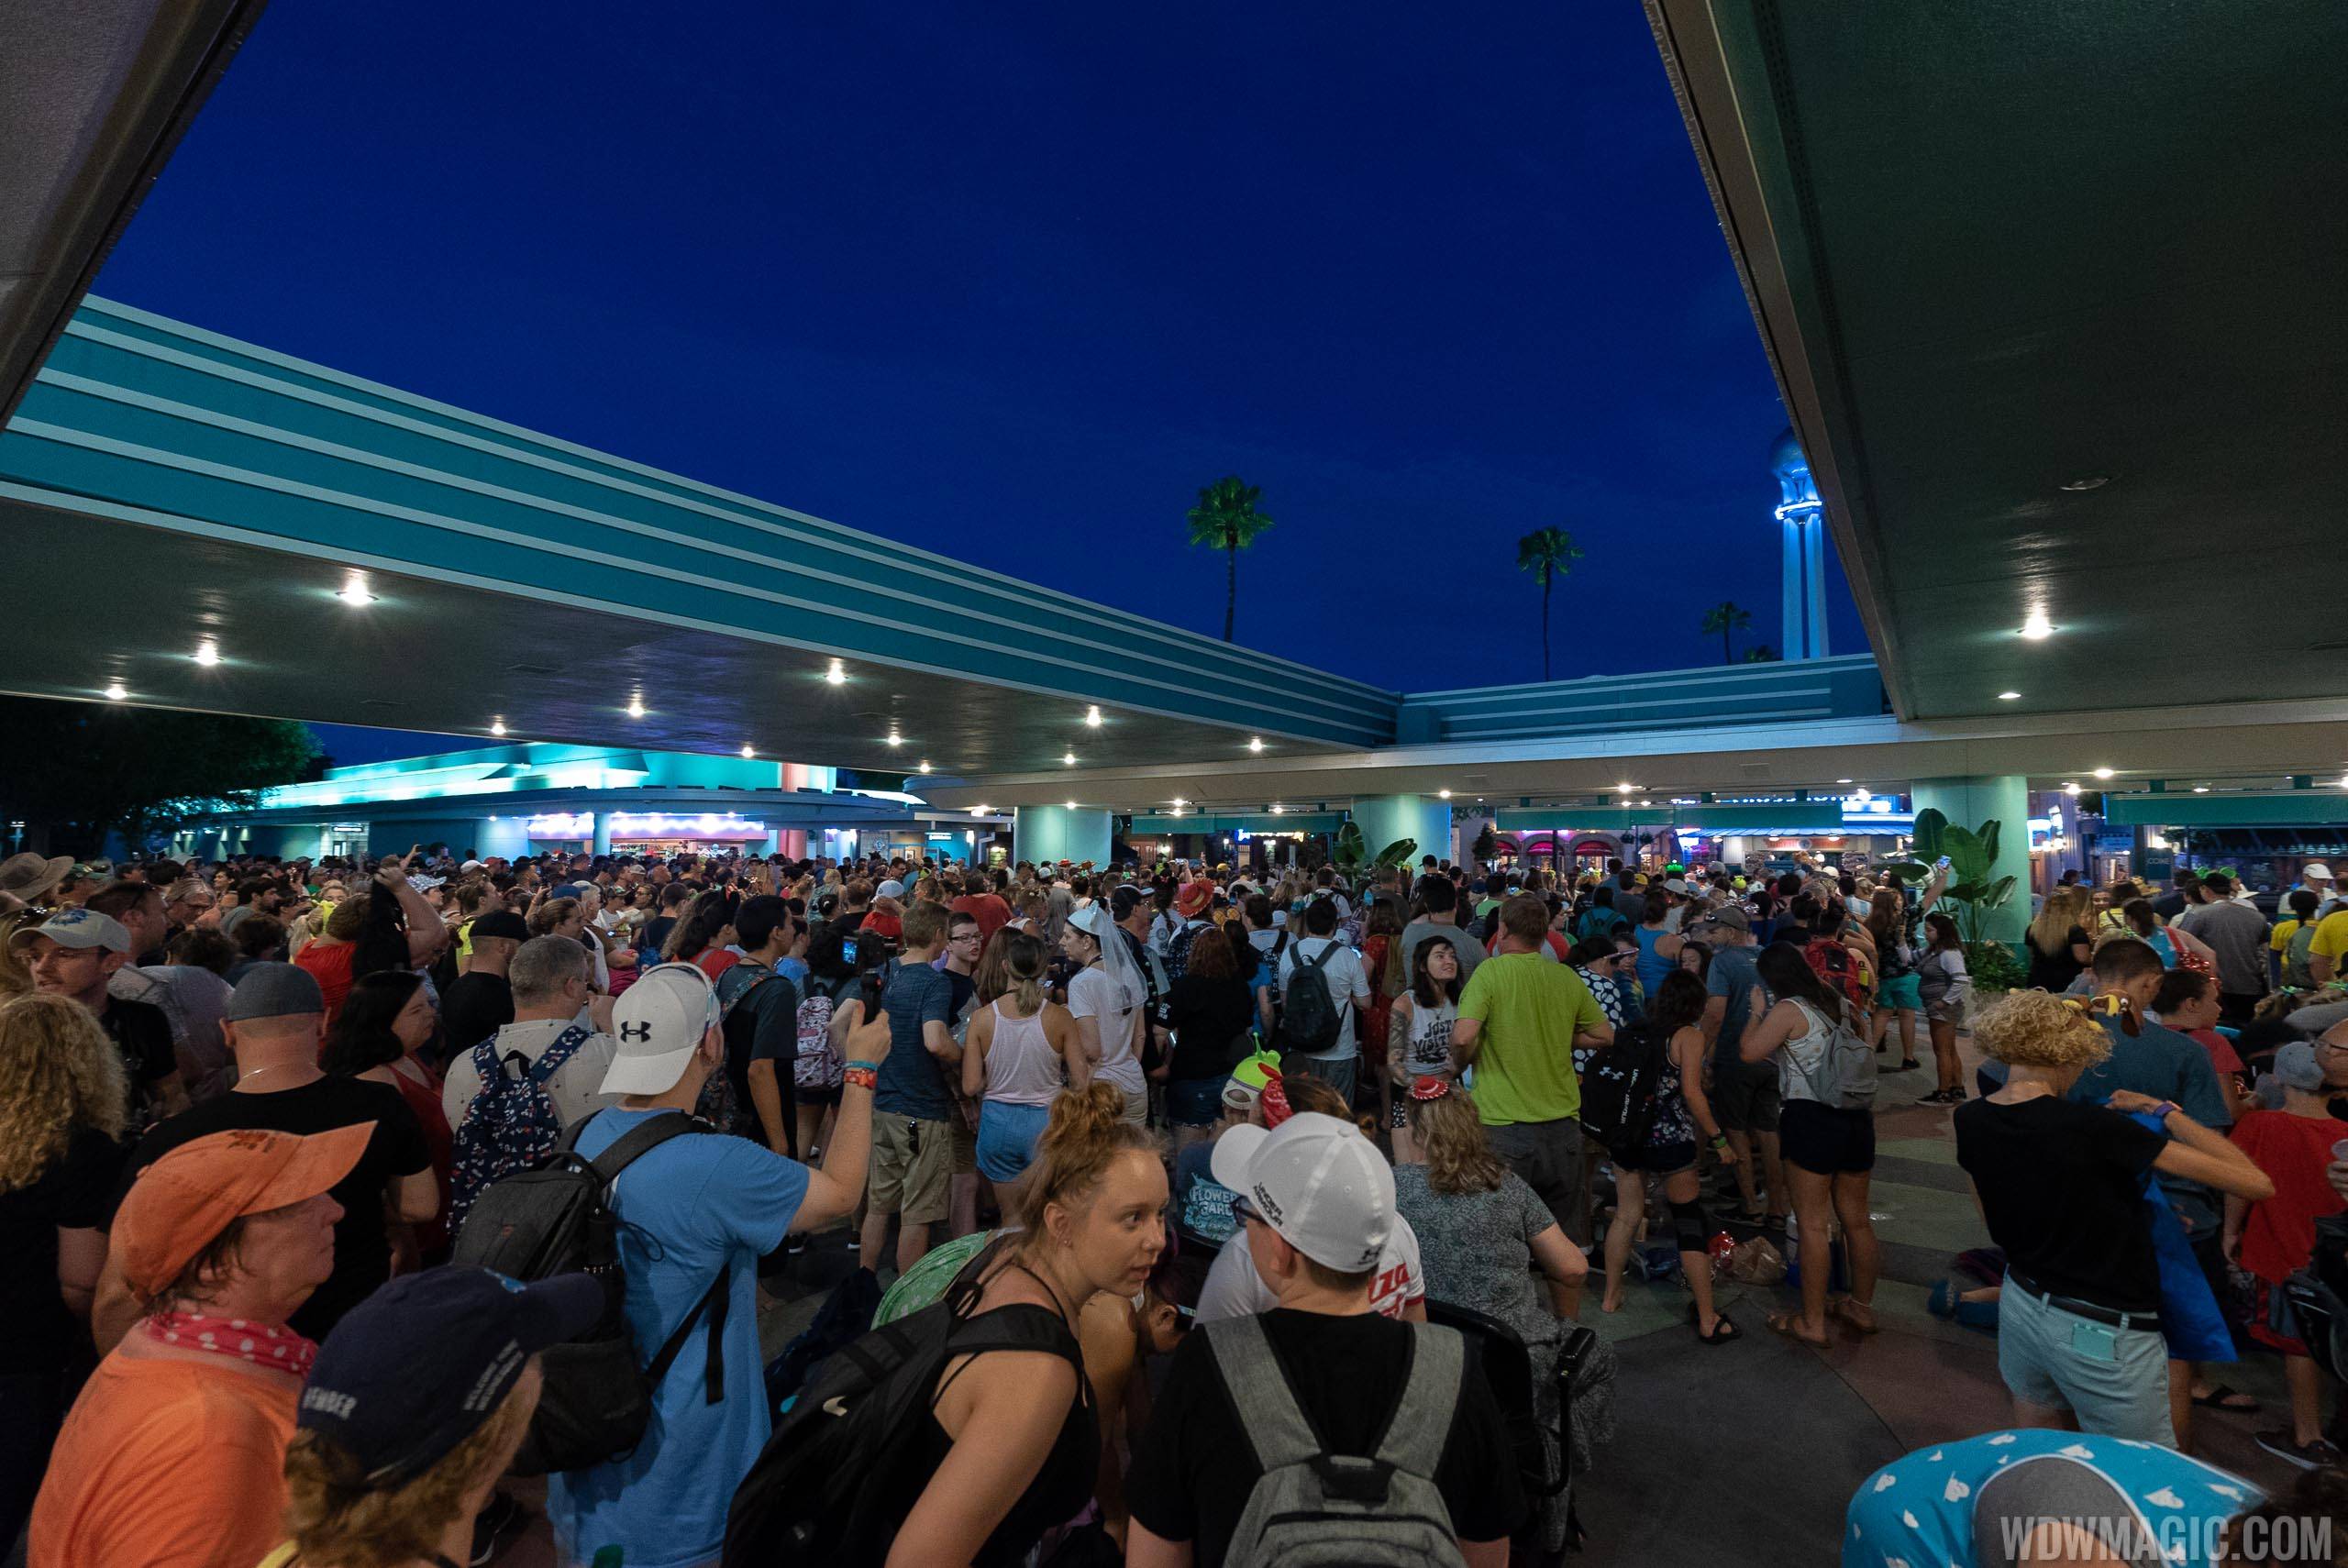 Guests began queuing at 4:30am to enter Disney's Hollywood Studios